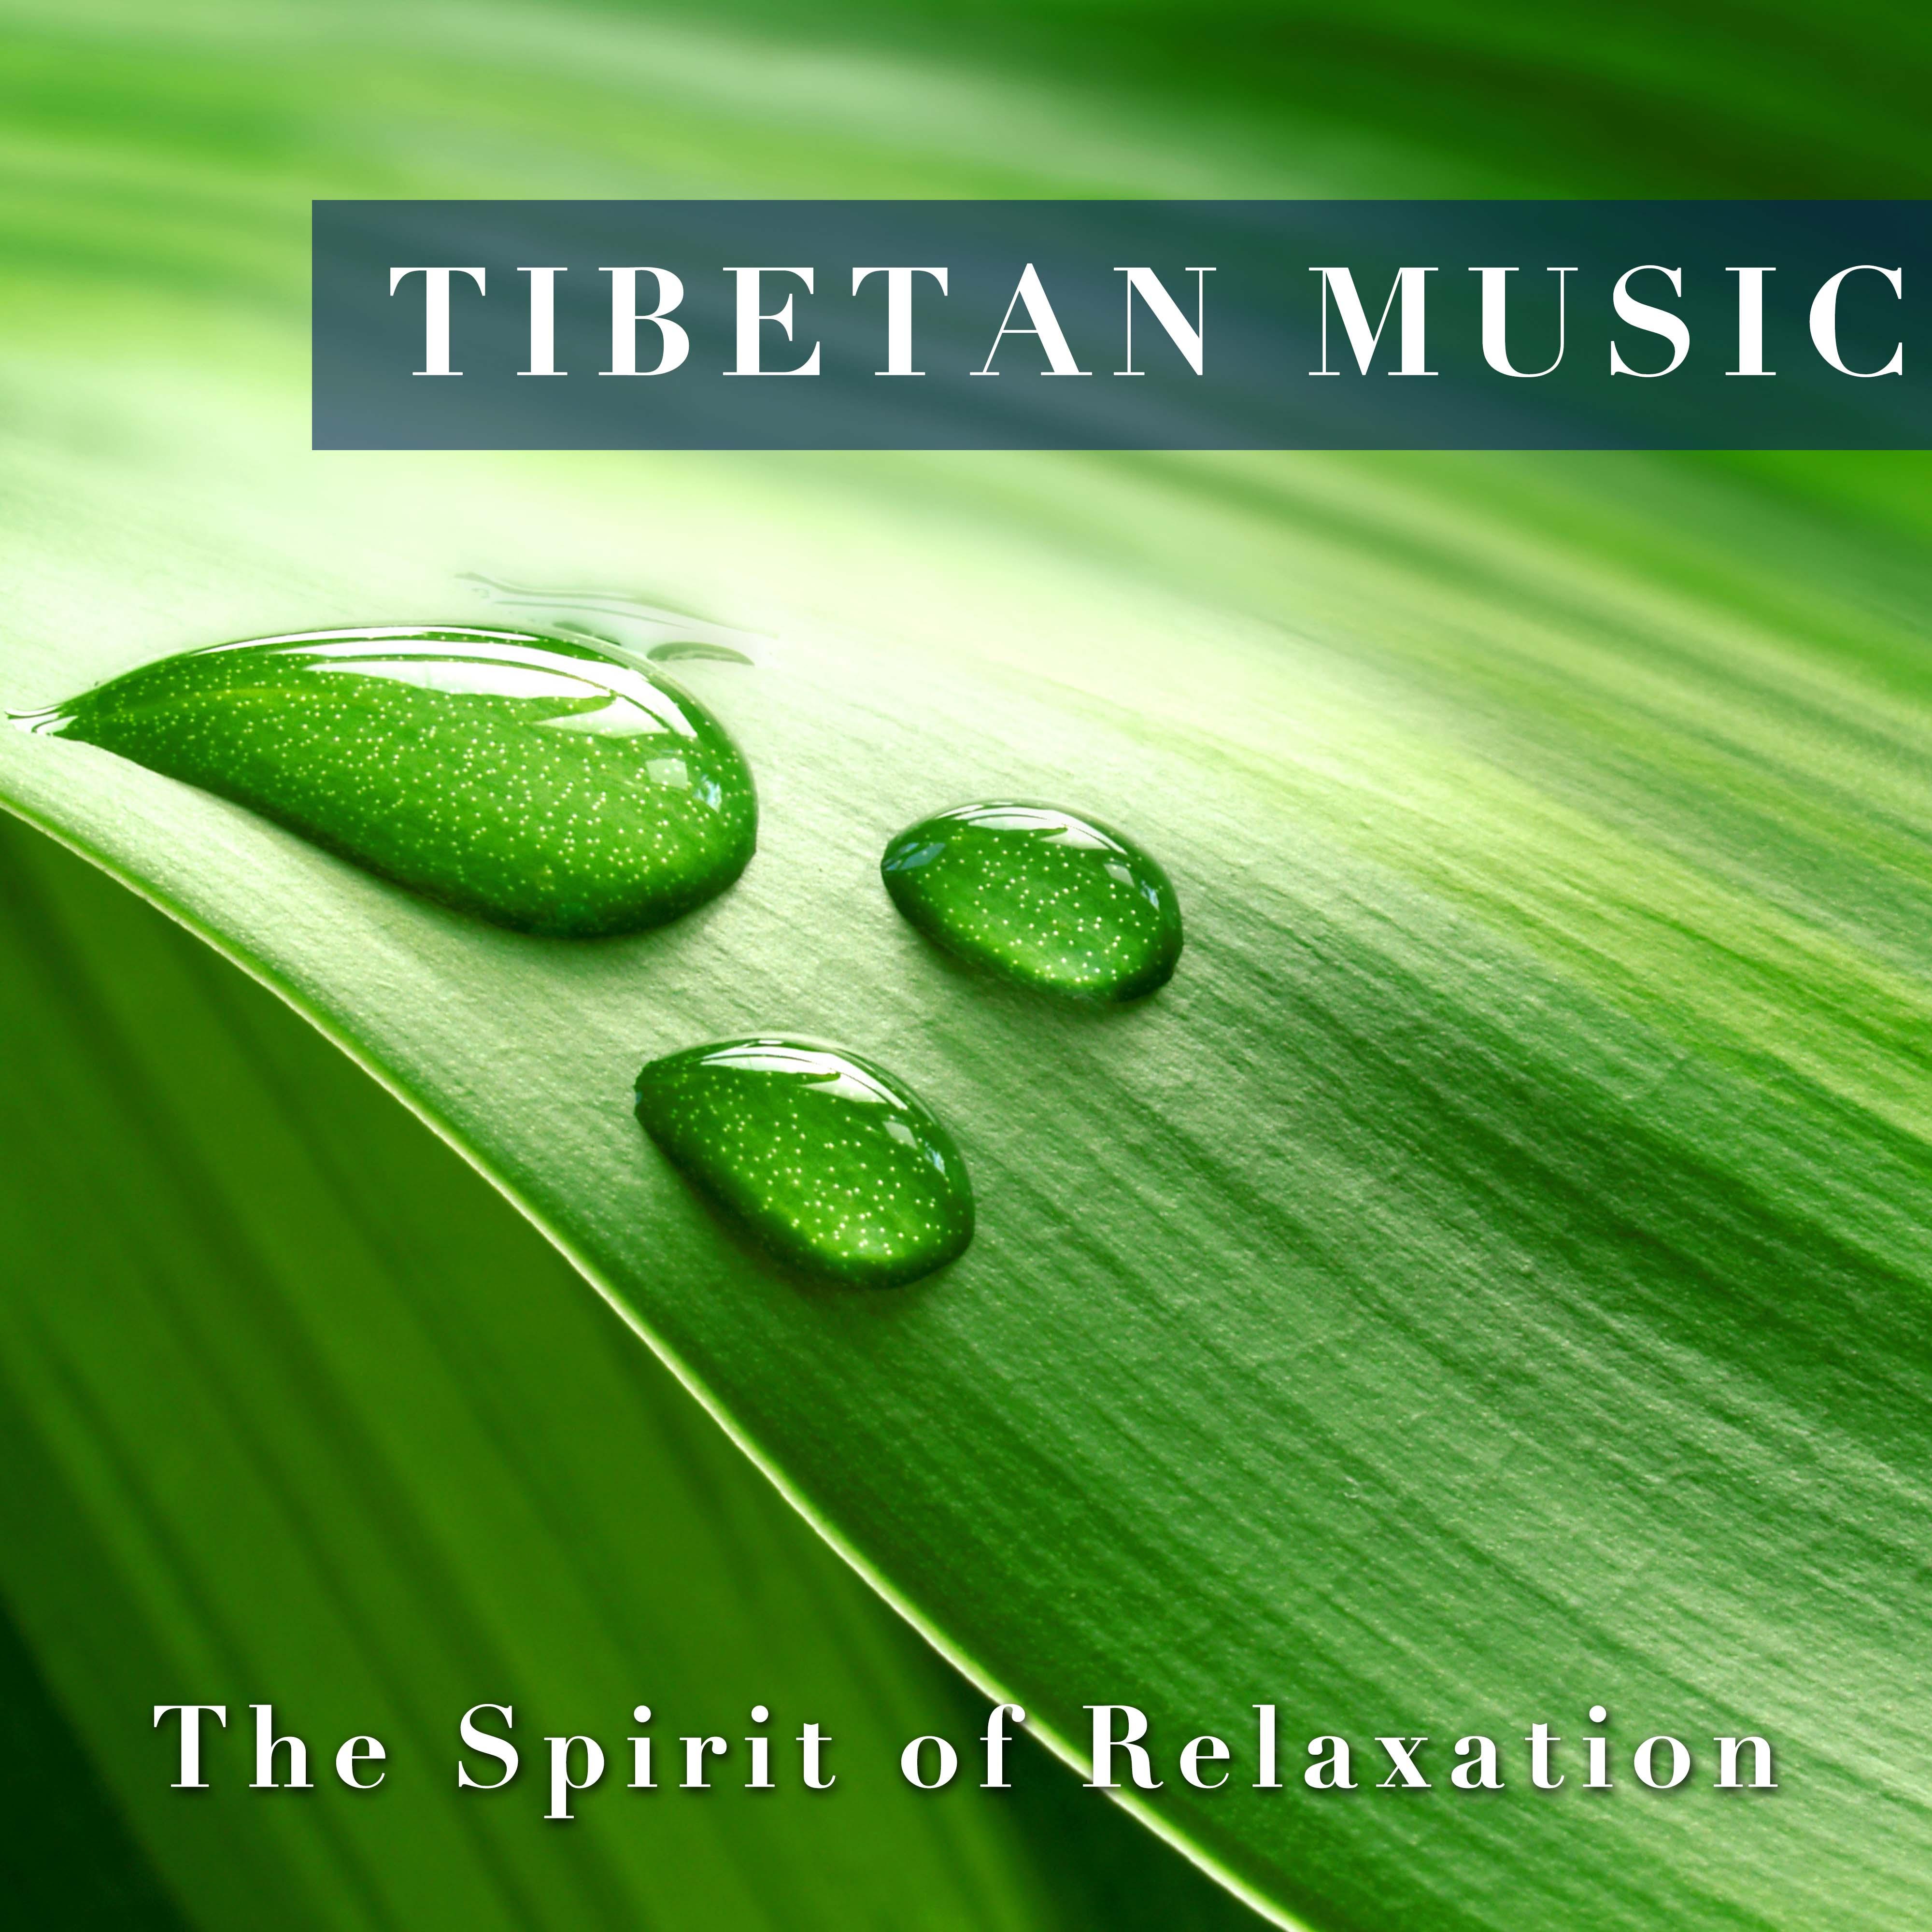 Tibetan Music - The Spirit of Relaxation